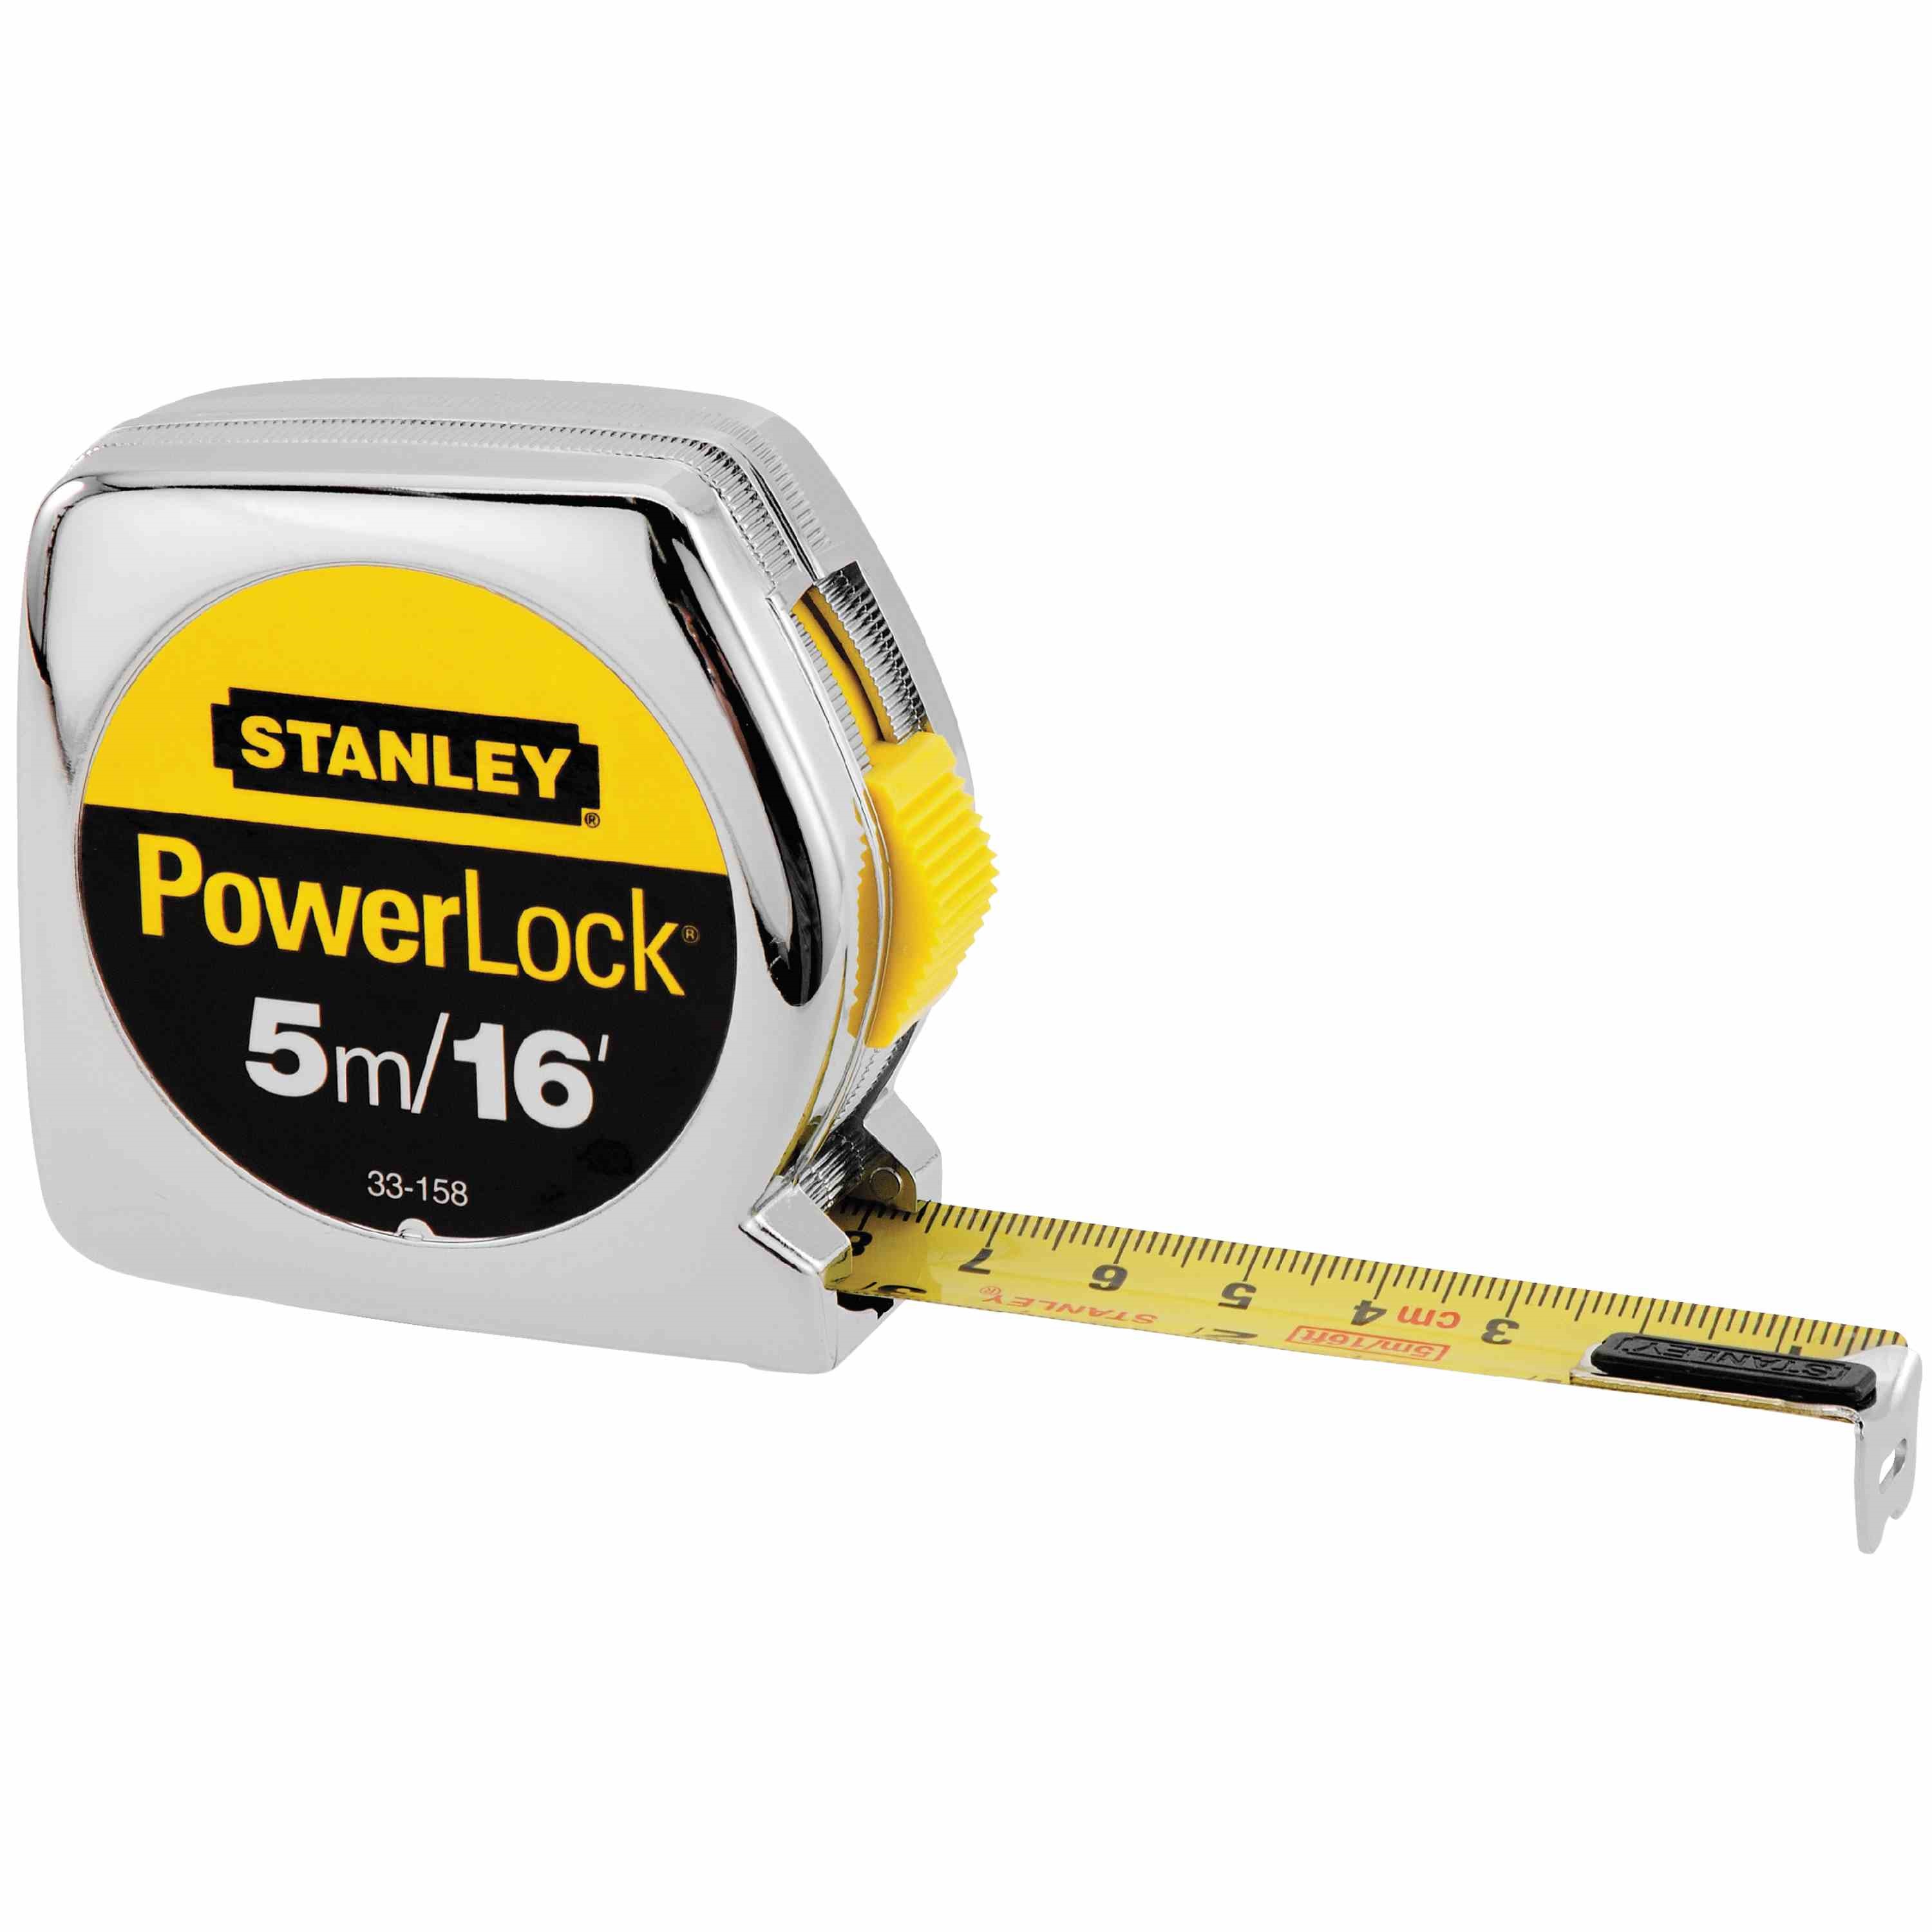 Measuring Tape Stanley 33-158